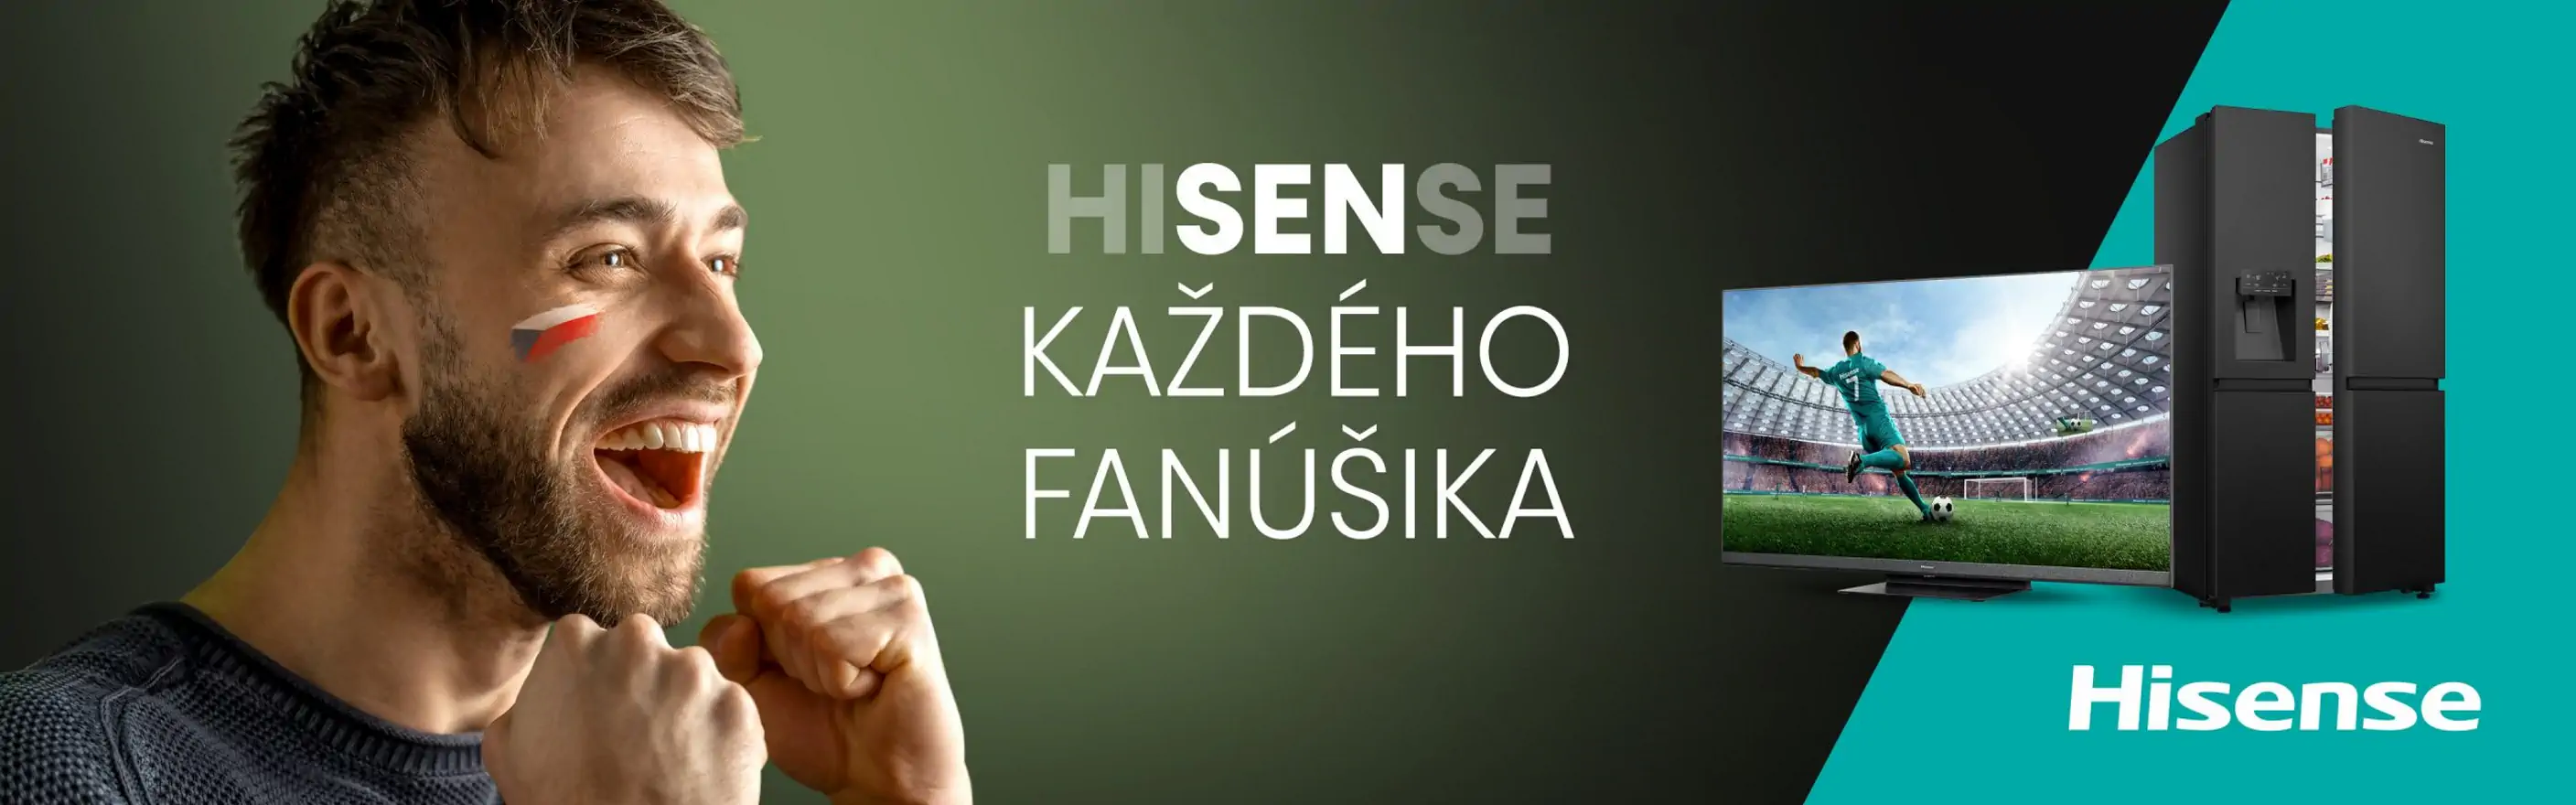 hisense-sen-kazdeho-fanusika-lp-desktop-sk-scaled2816x880.webp